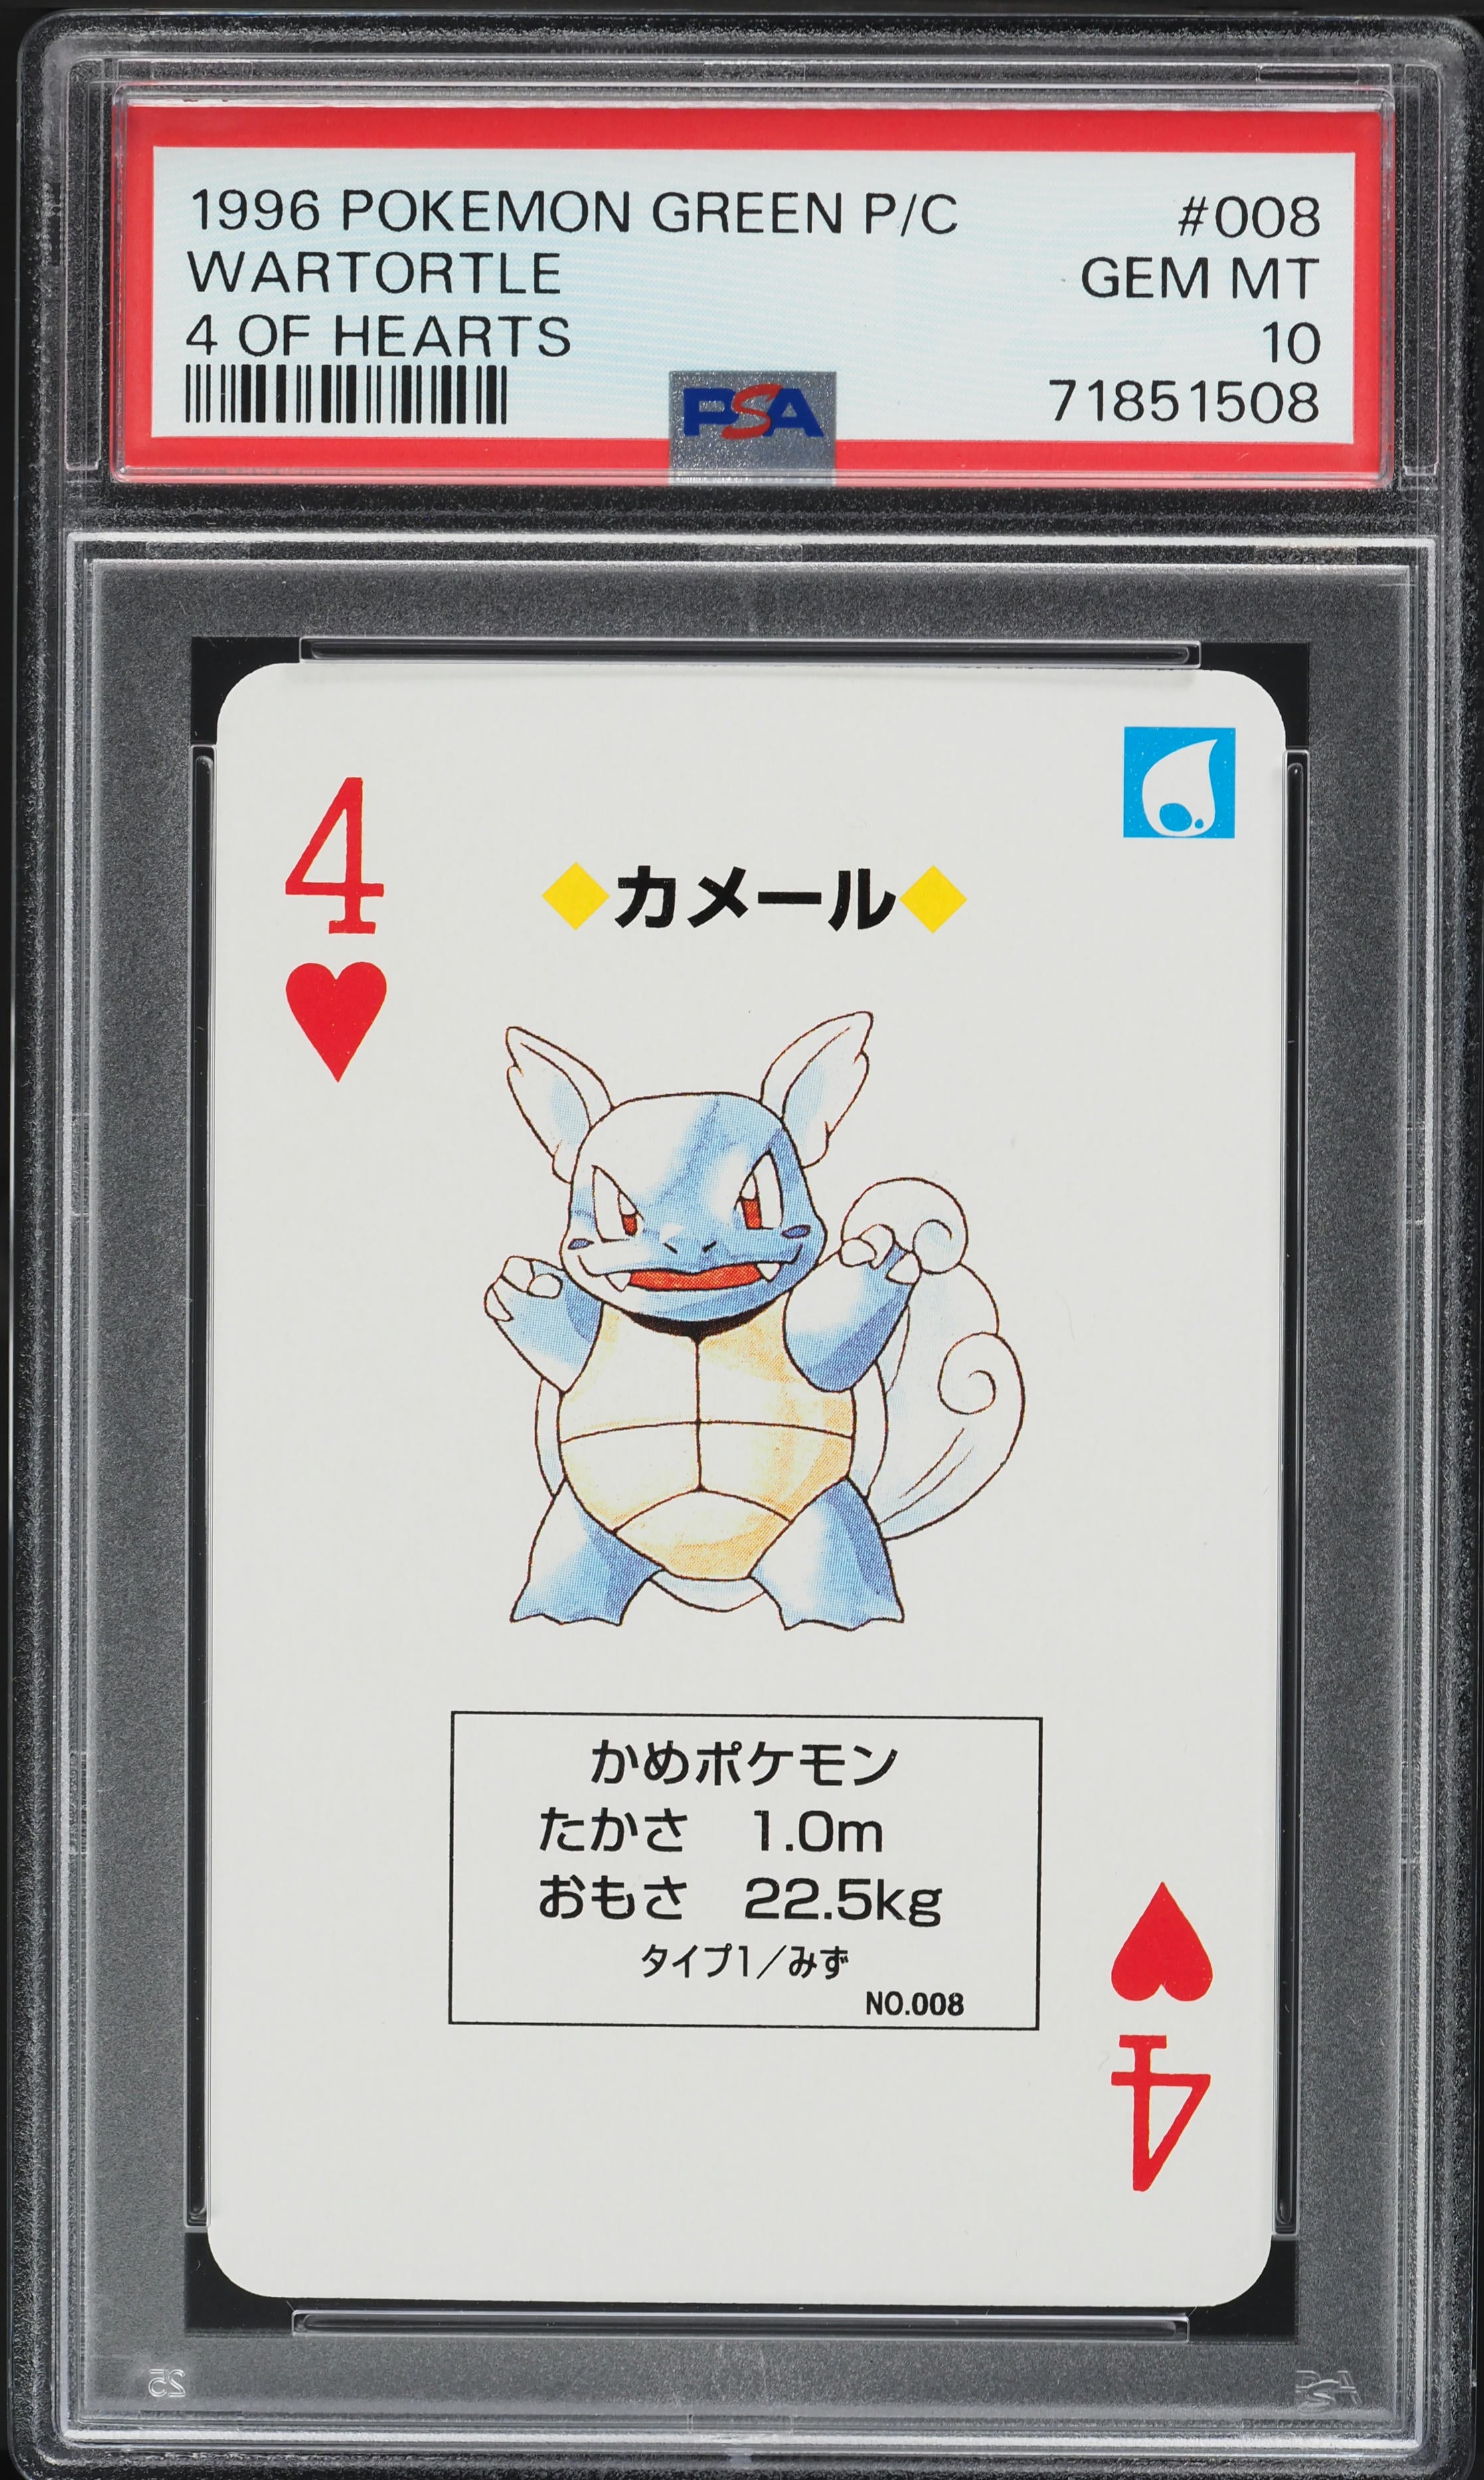 1996 Pokemon Green Version Playing Cards 4 Of Hearts Wartortle #008 PSA 10 GEM